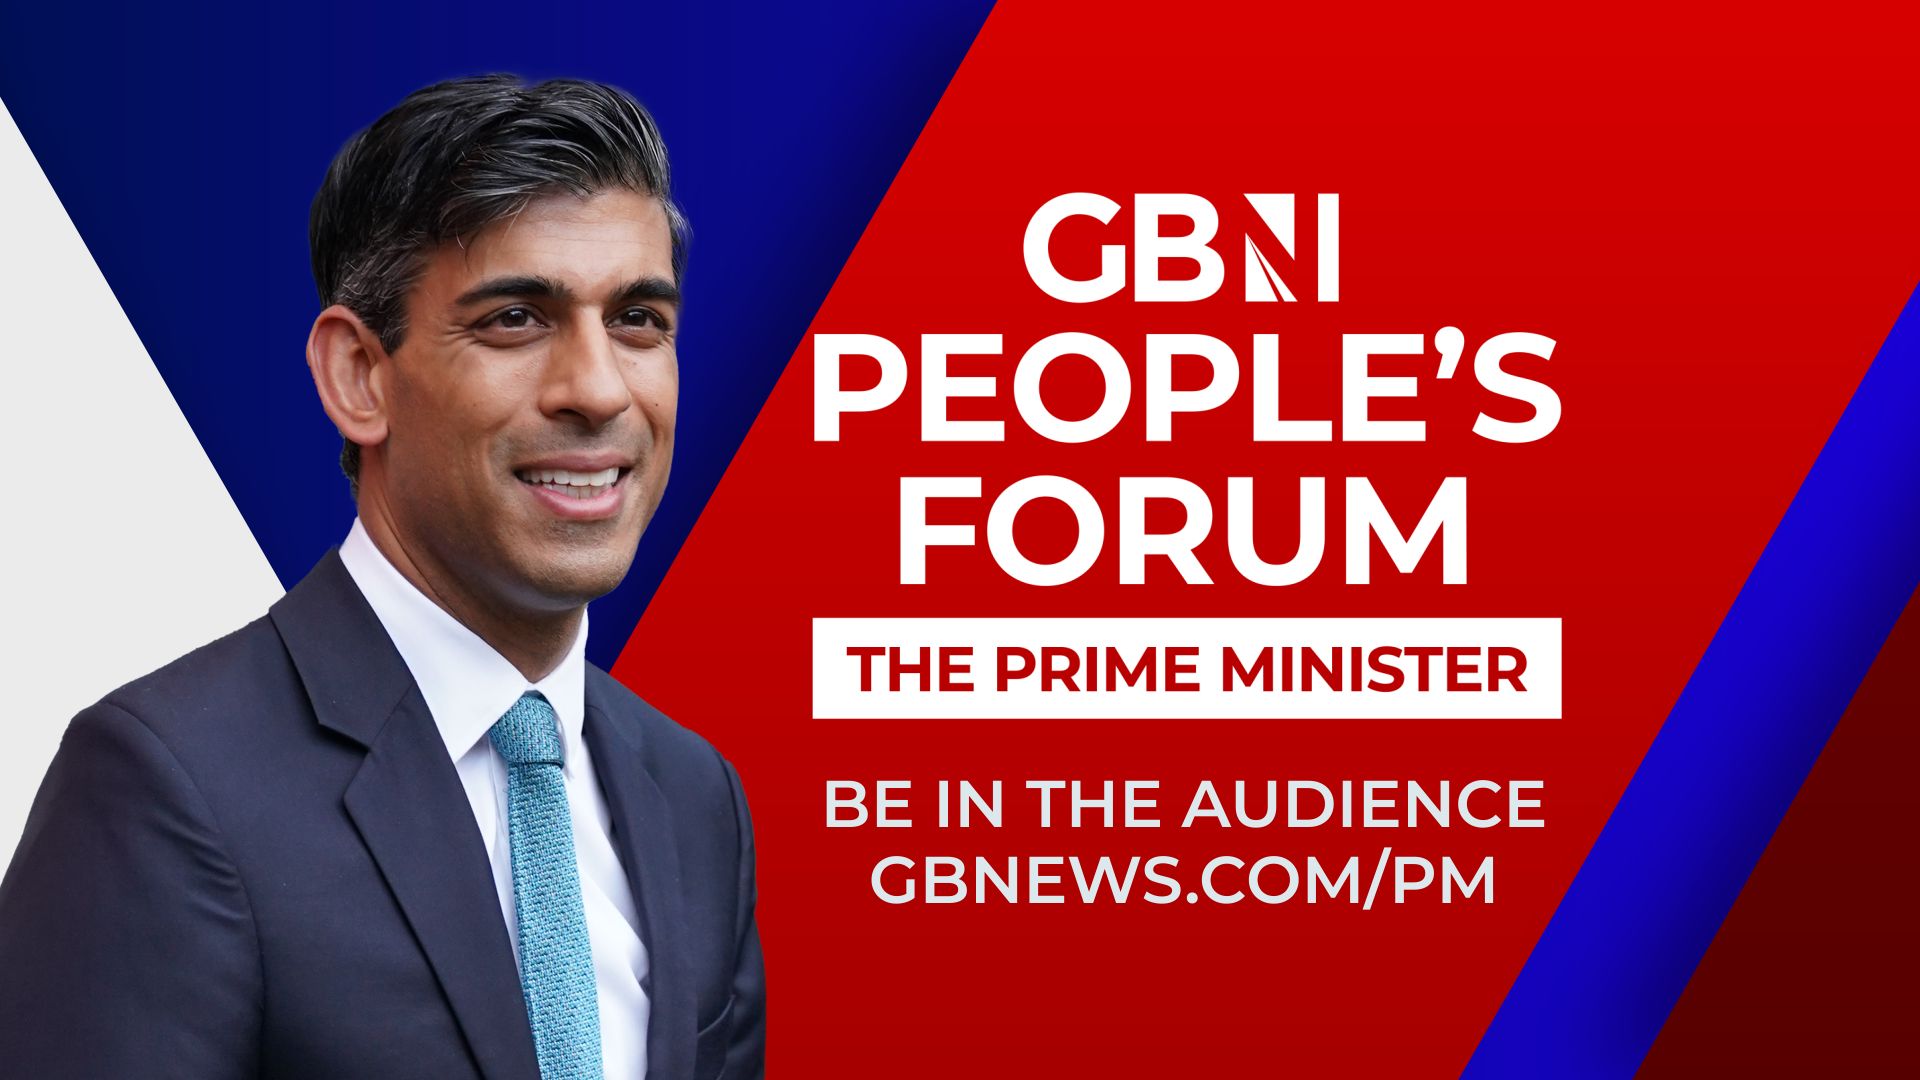 GB News People's Forum: The Prime Minister, Darlington, England, United Kingdom